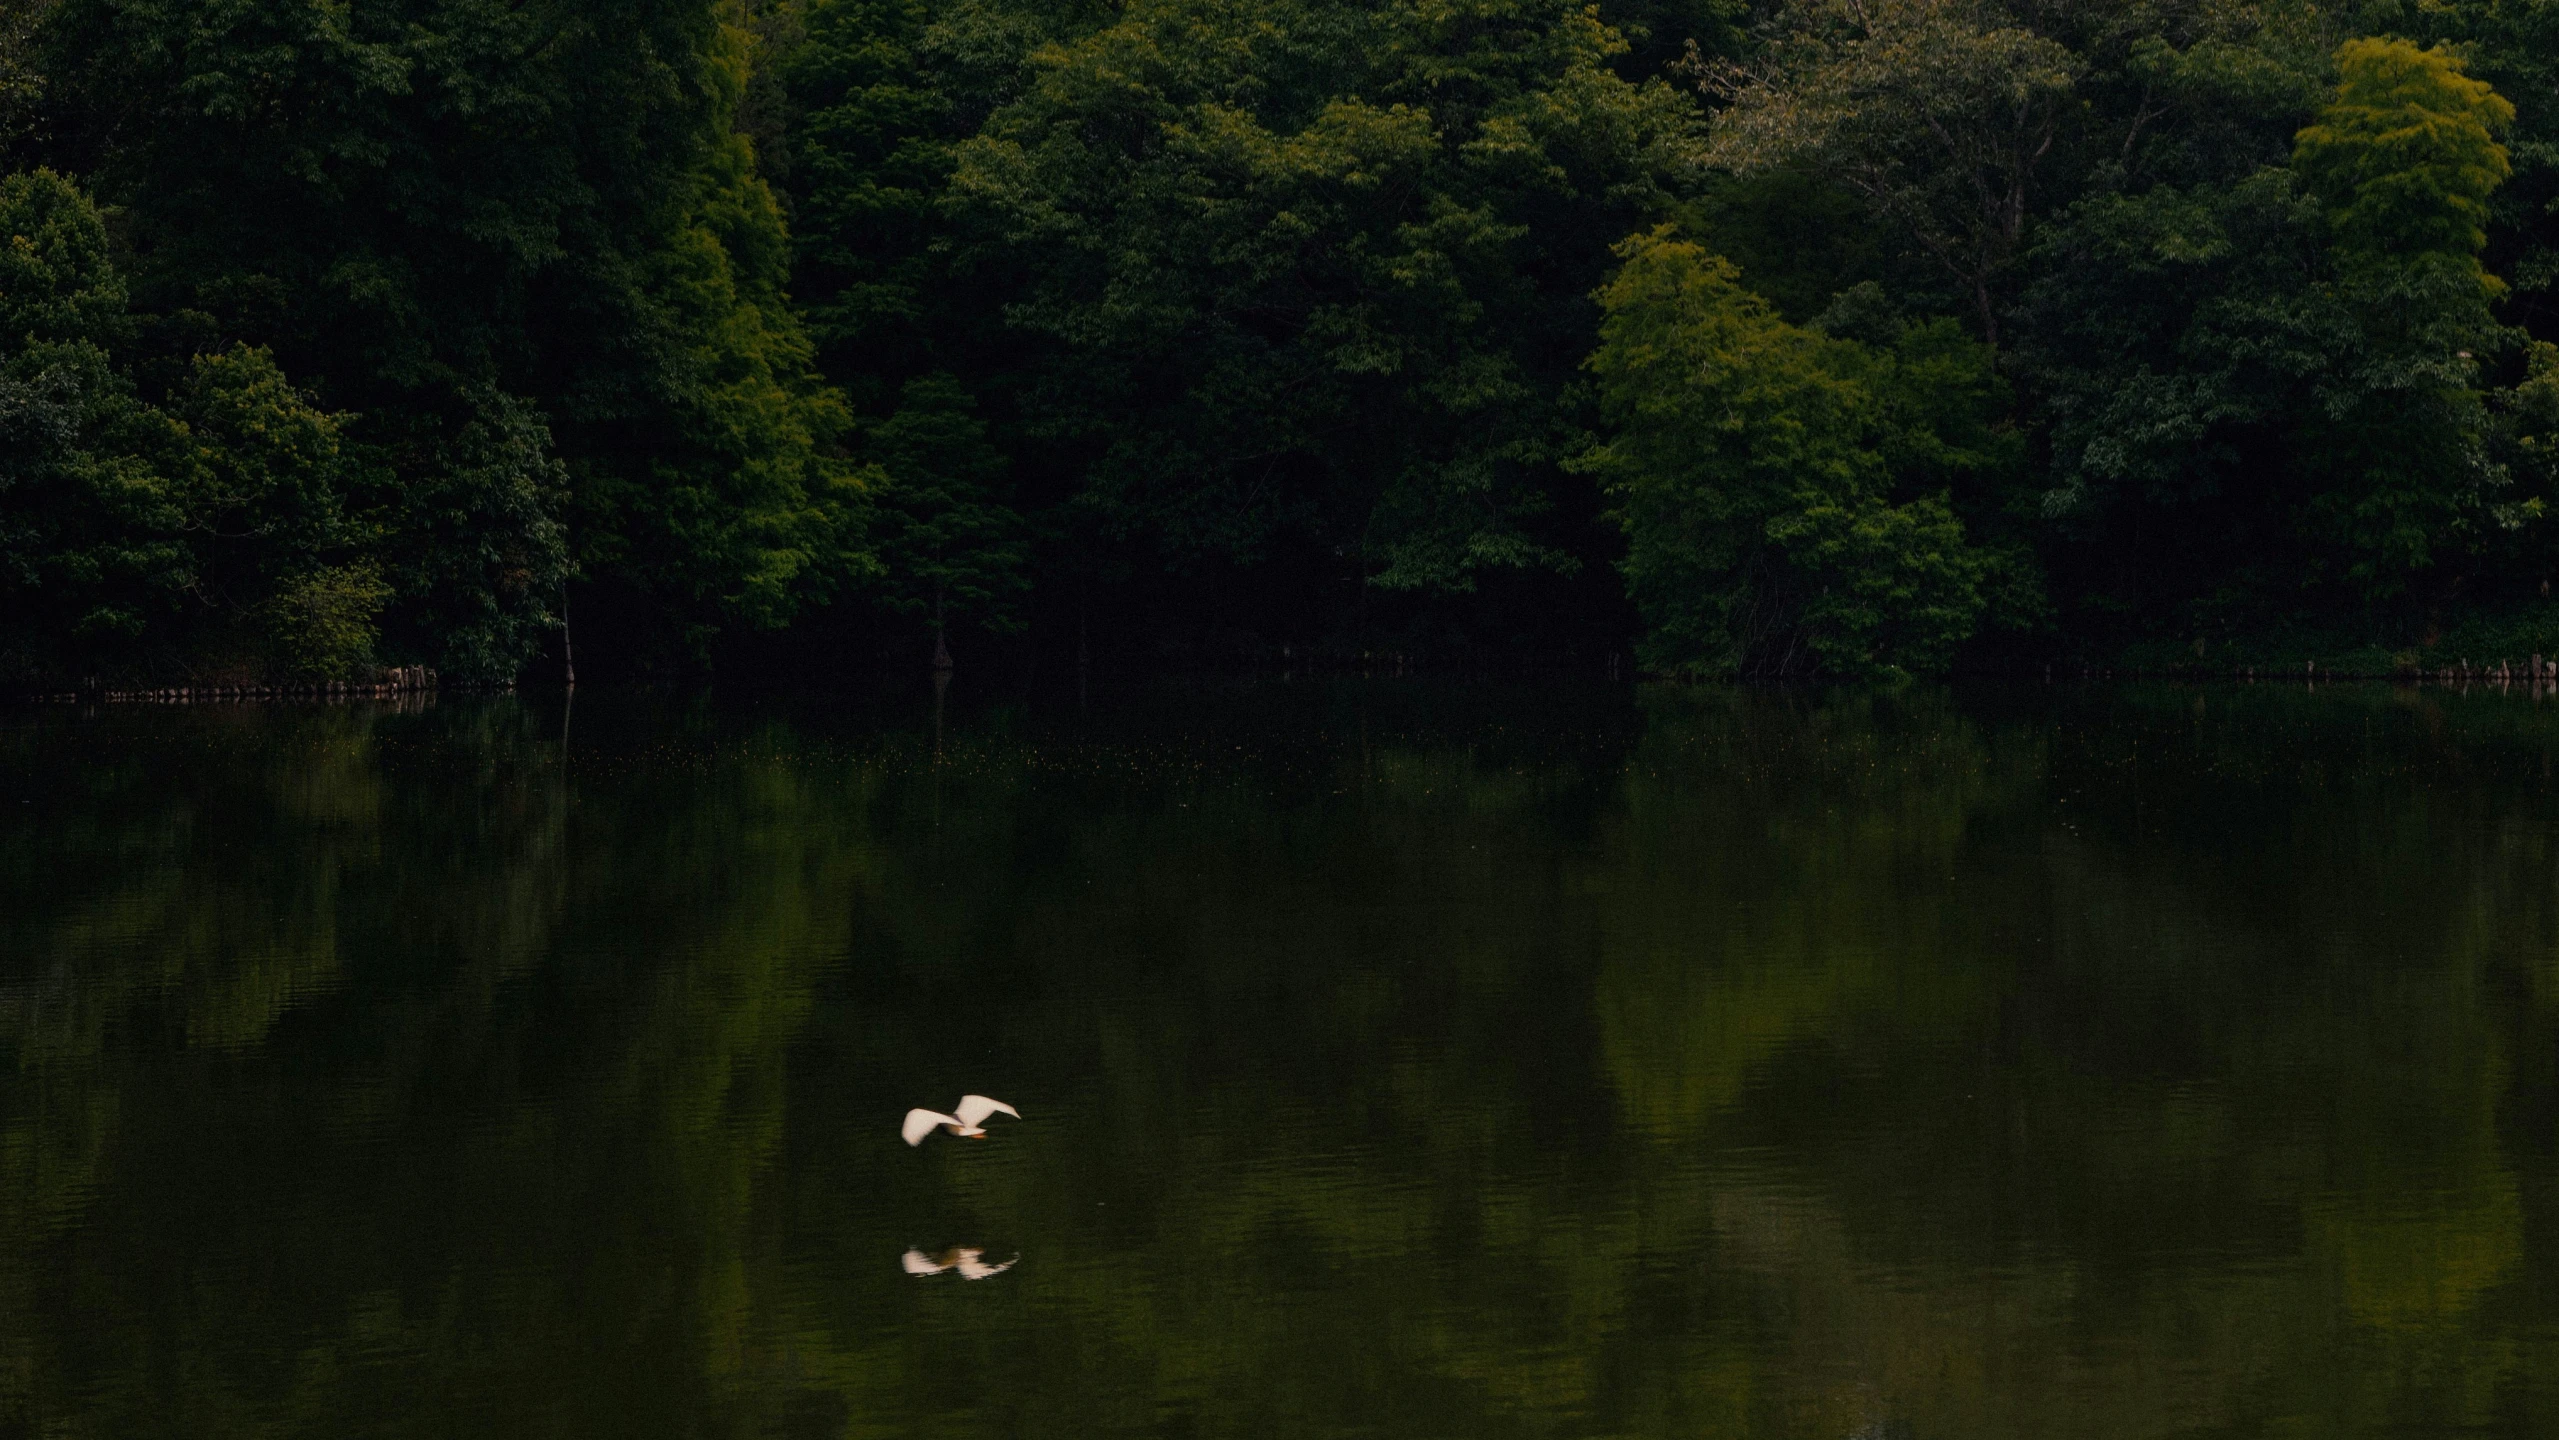 three white ducks swimming on a pond near some trees